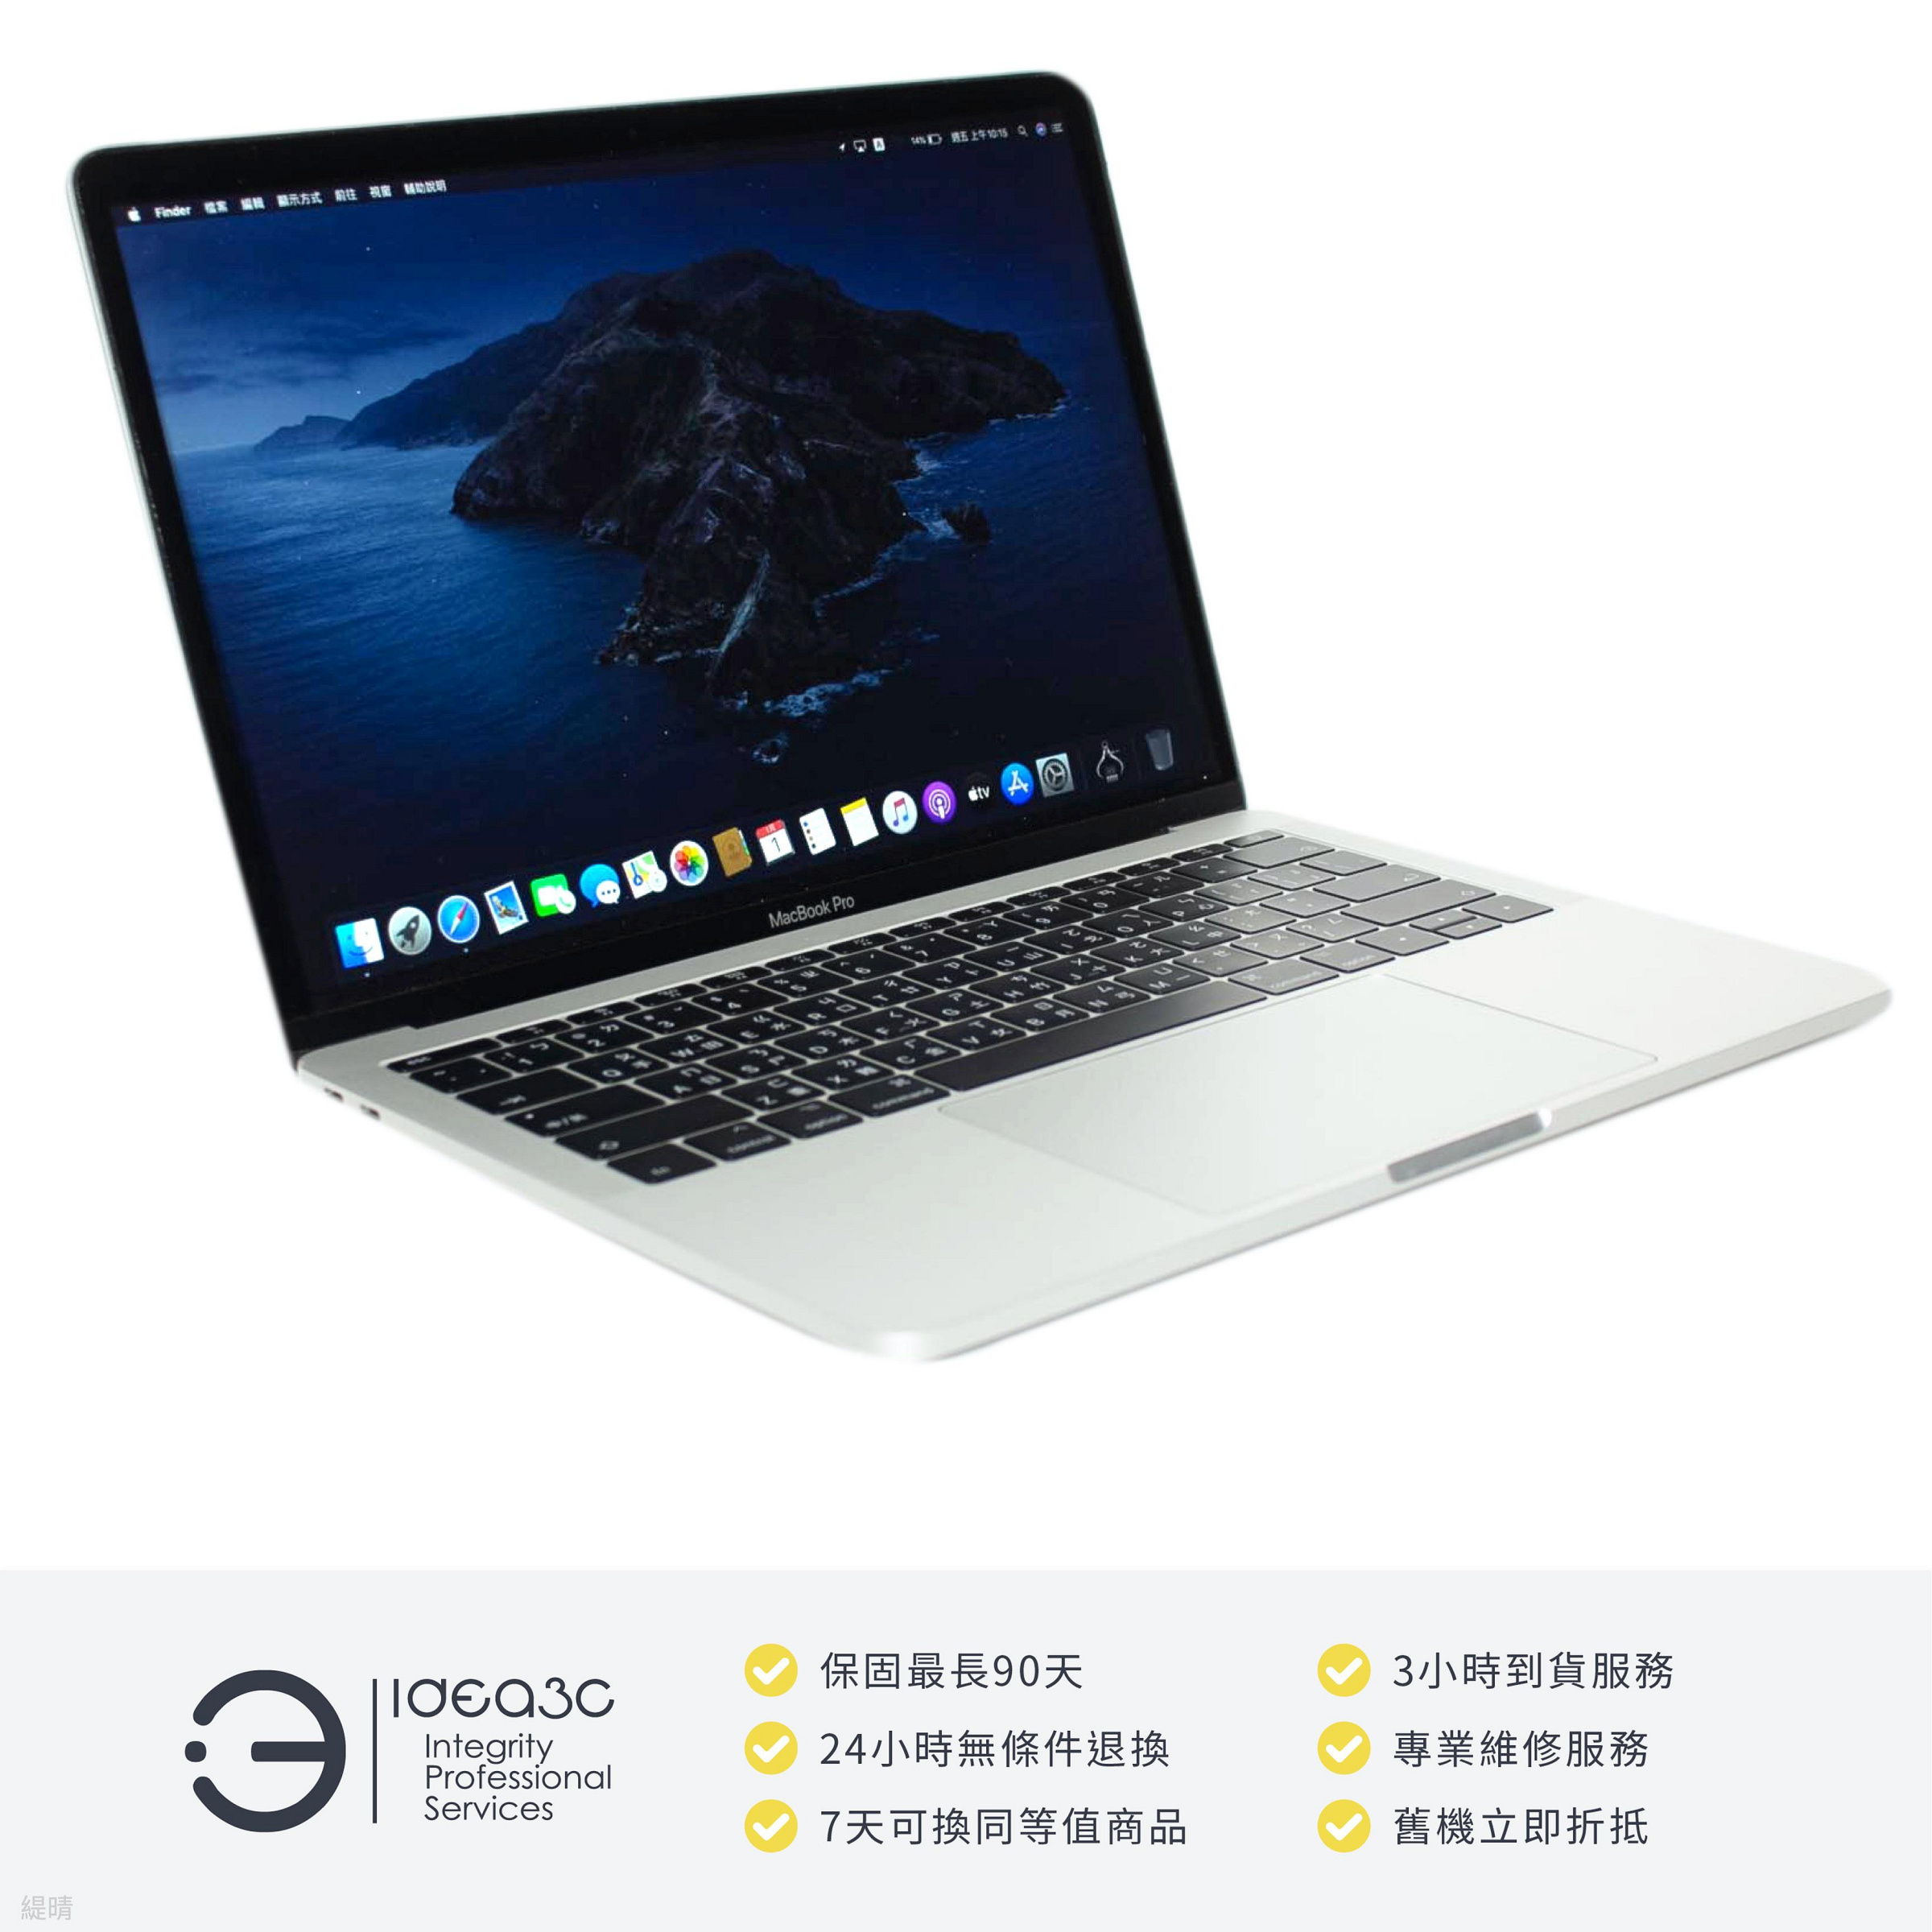 「點子3C」MacBook Pro 13吋 i5 2.3G 銀色【店保3個月】8G 128G SSD A1708 2017年款 Apple 筆電 ZH354